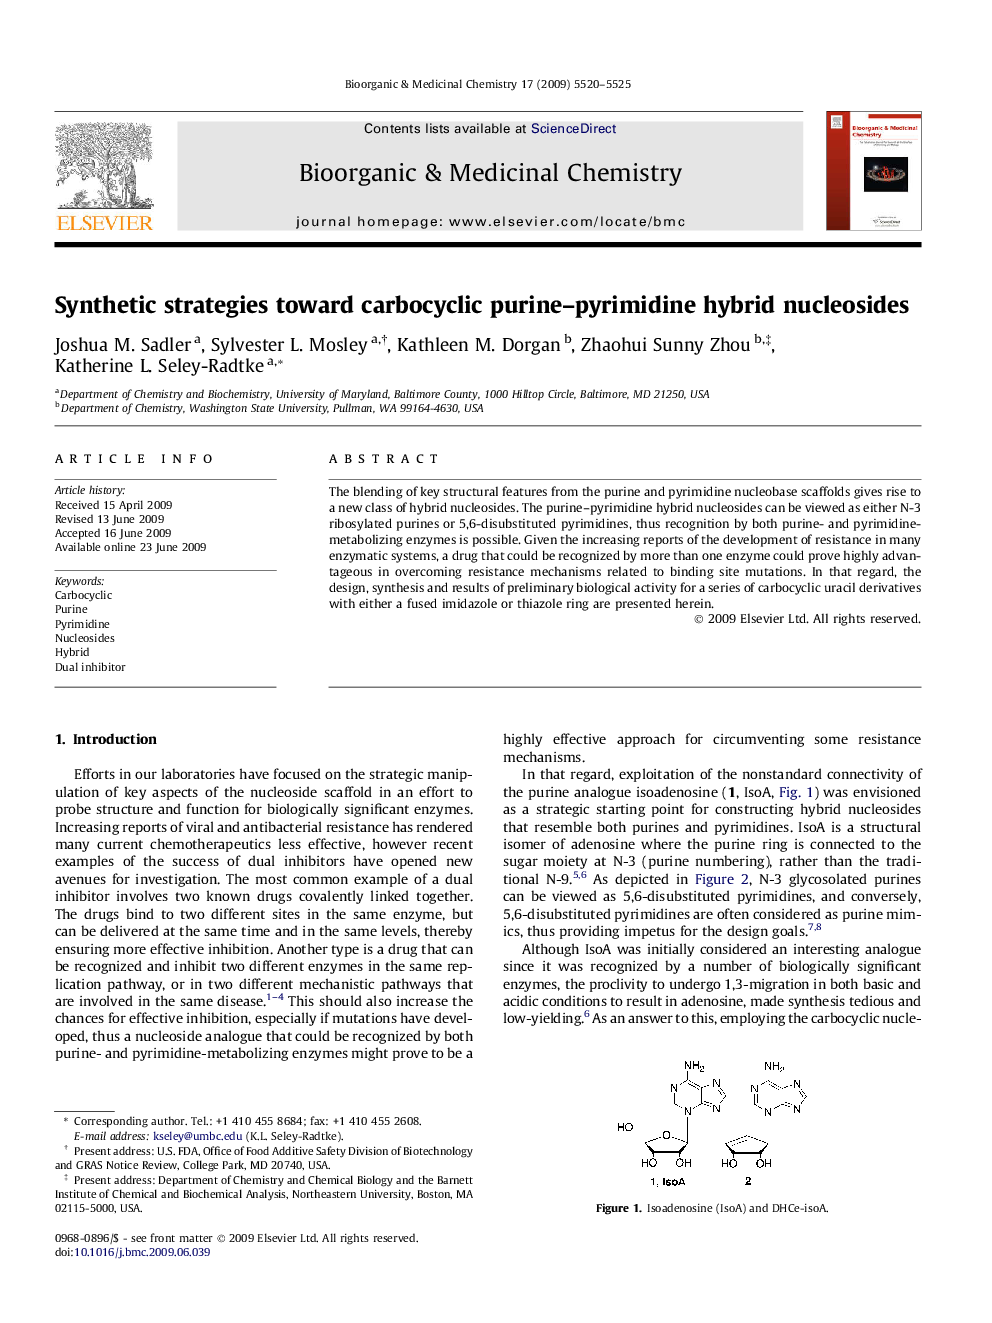 Synthetic strategies toward carbocyclic purine–pyrimidine hybrid nucleosides